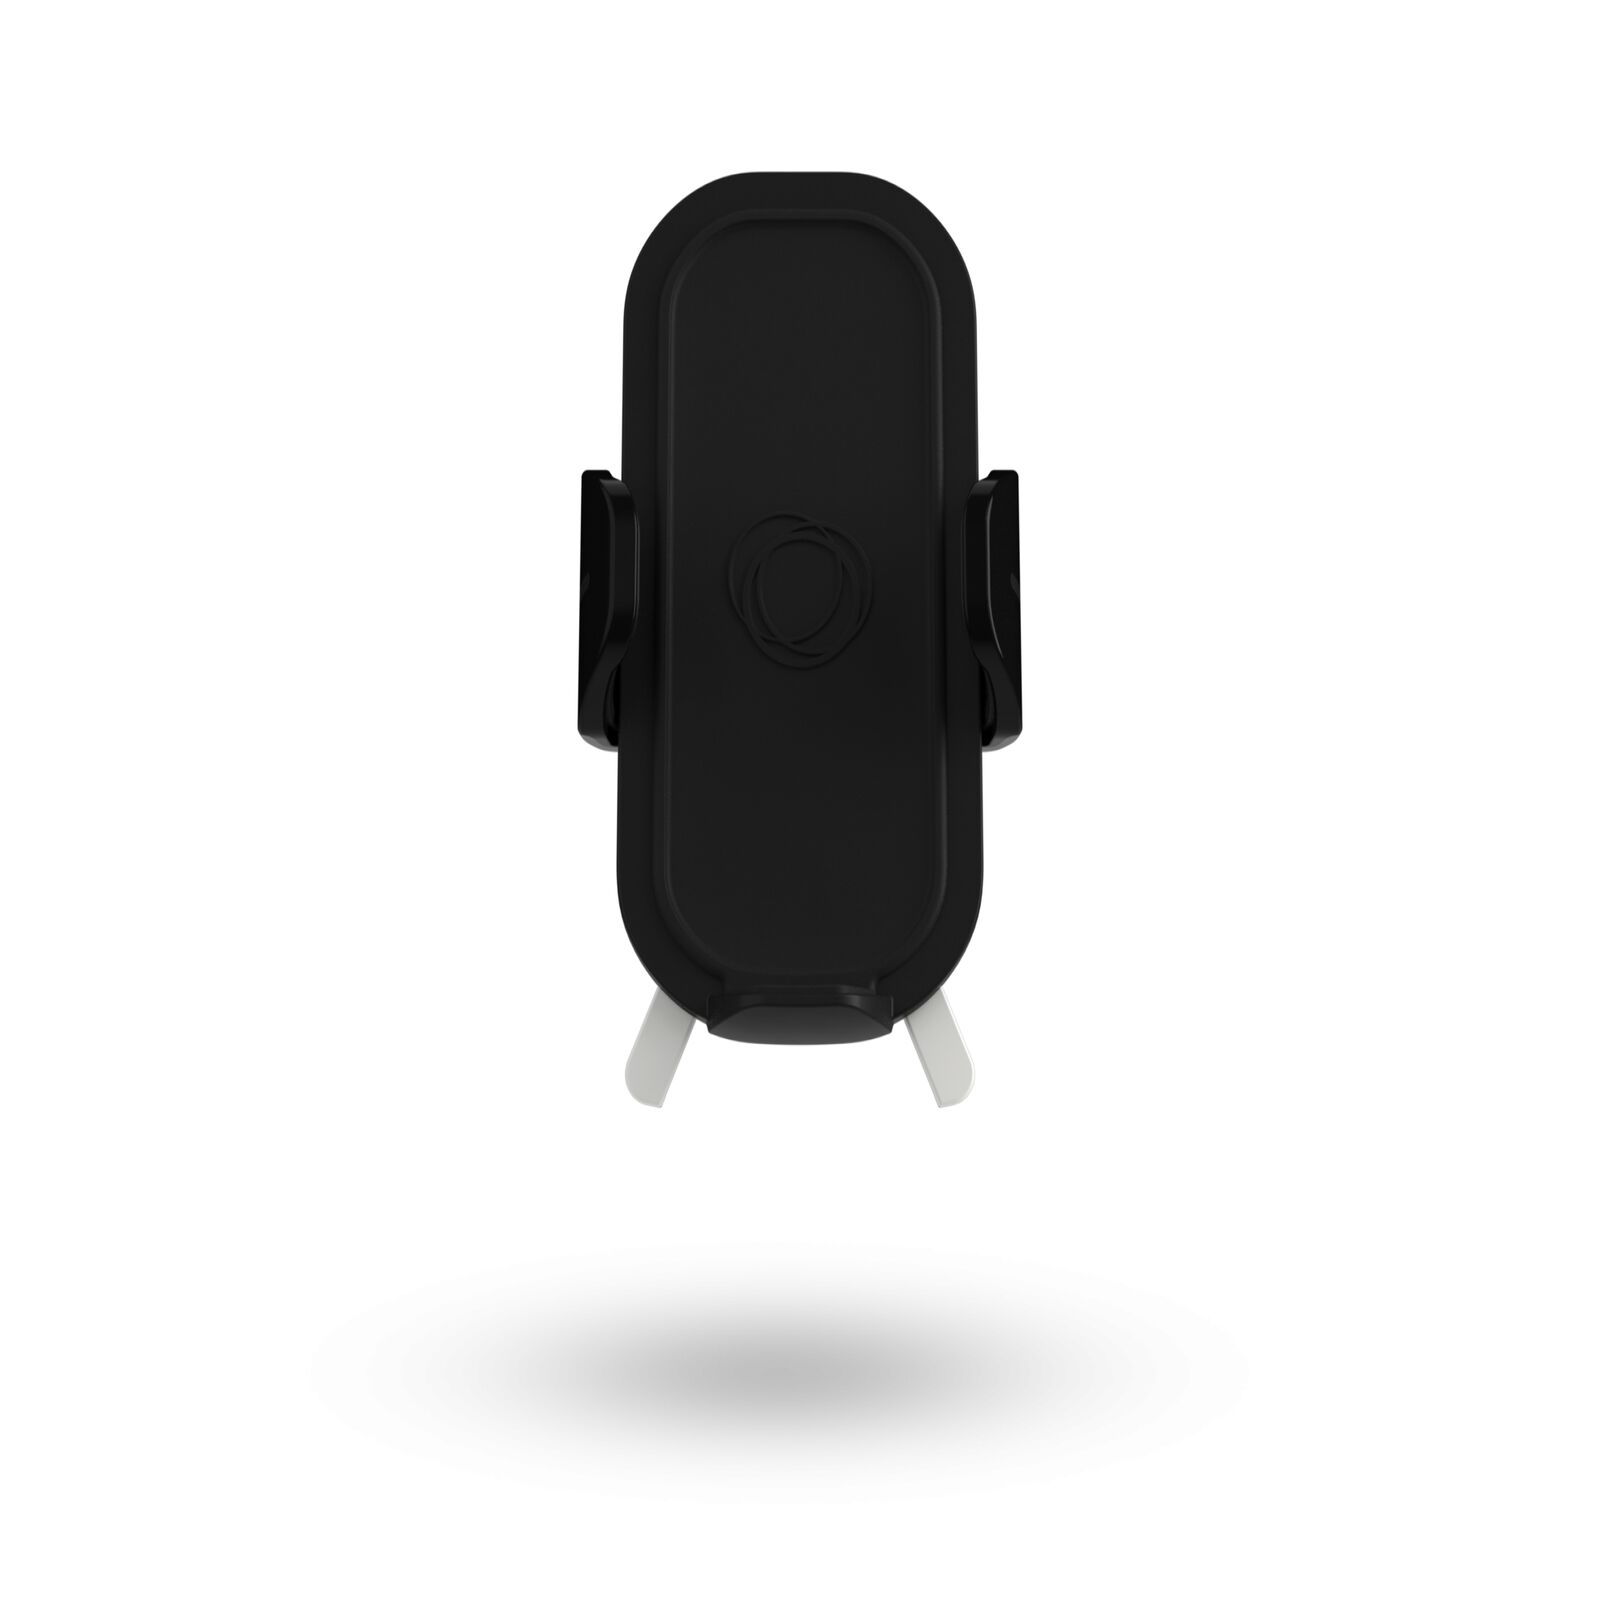 Bugaboo smartphone holder - View 1